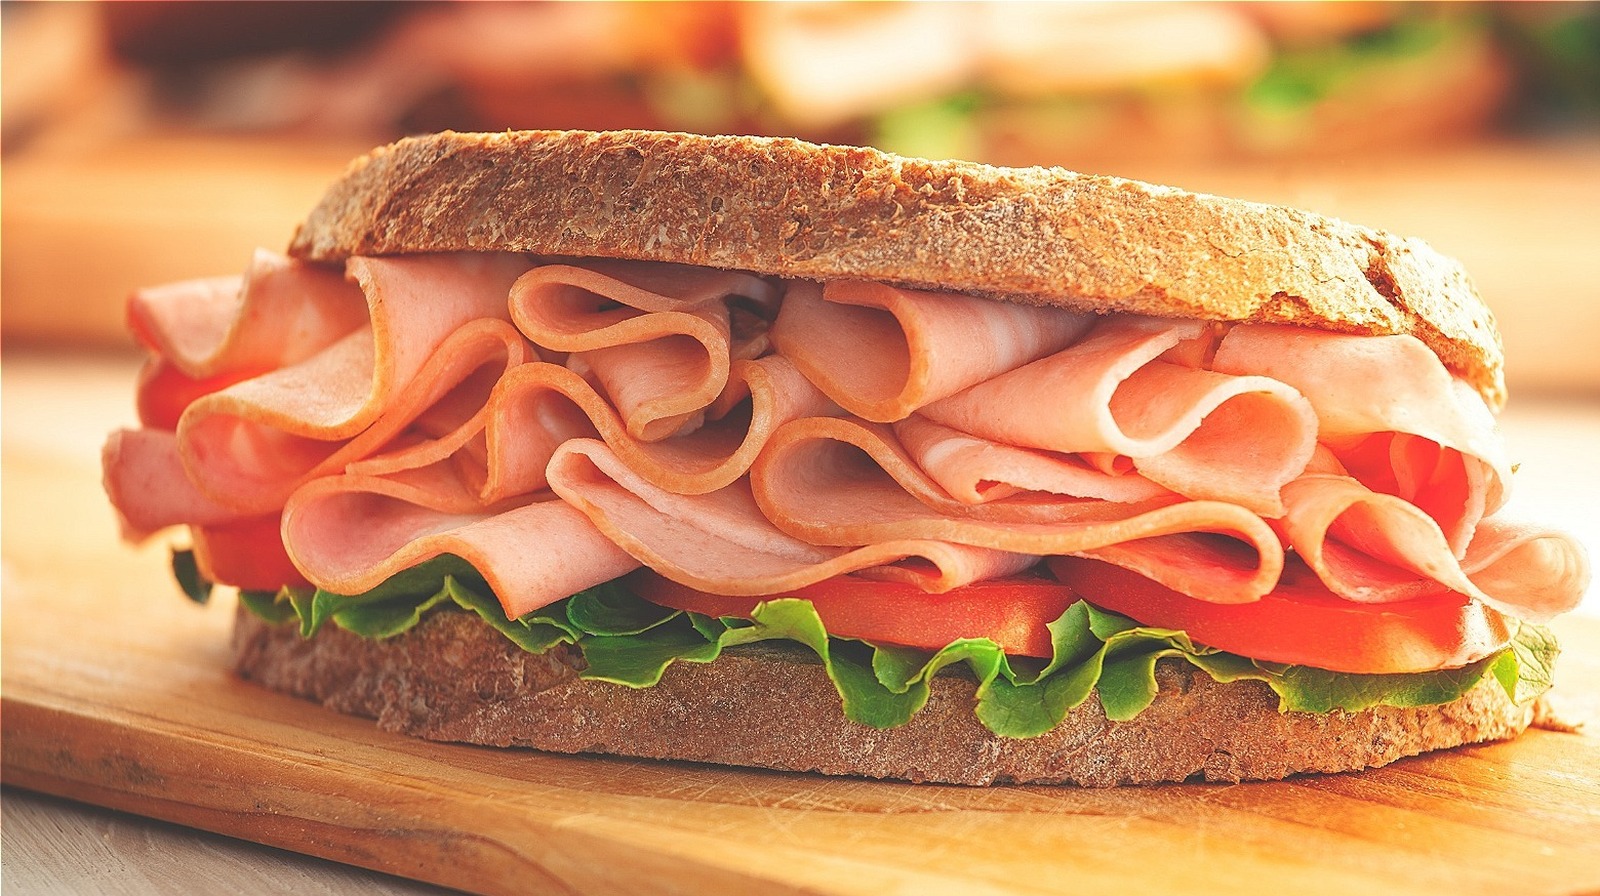 The Ham Sandwich Government Warning That Had Reddit Shook